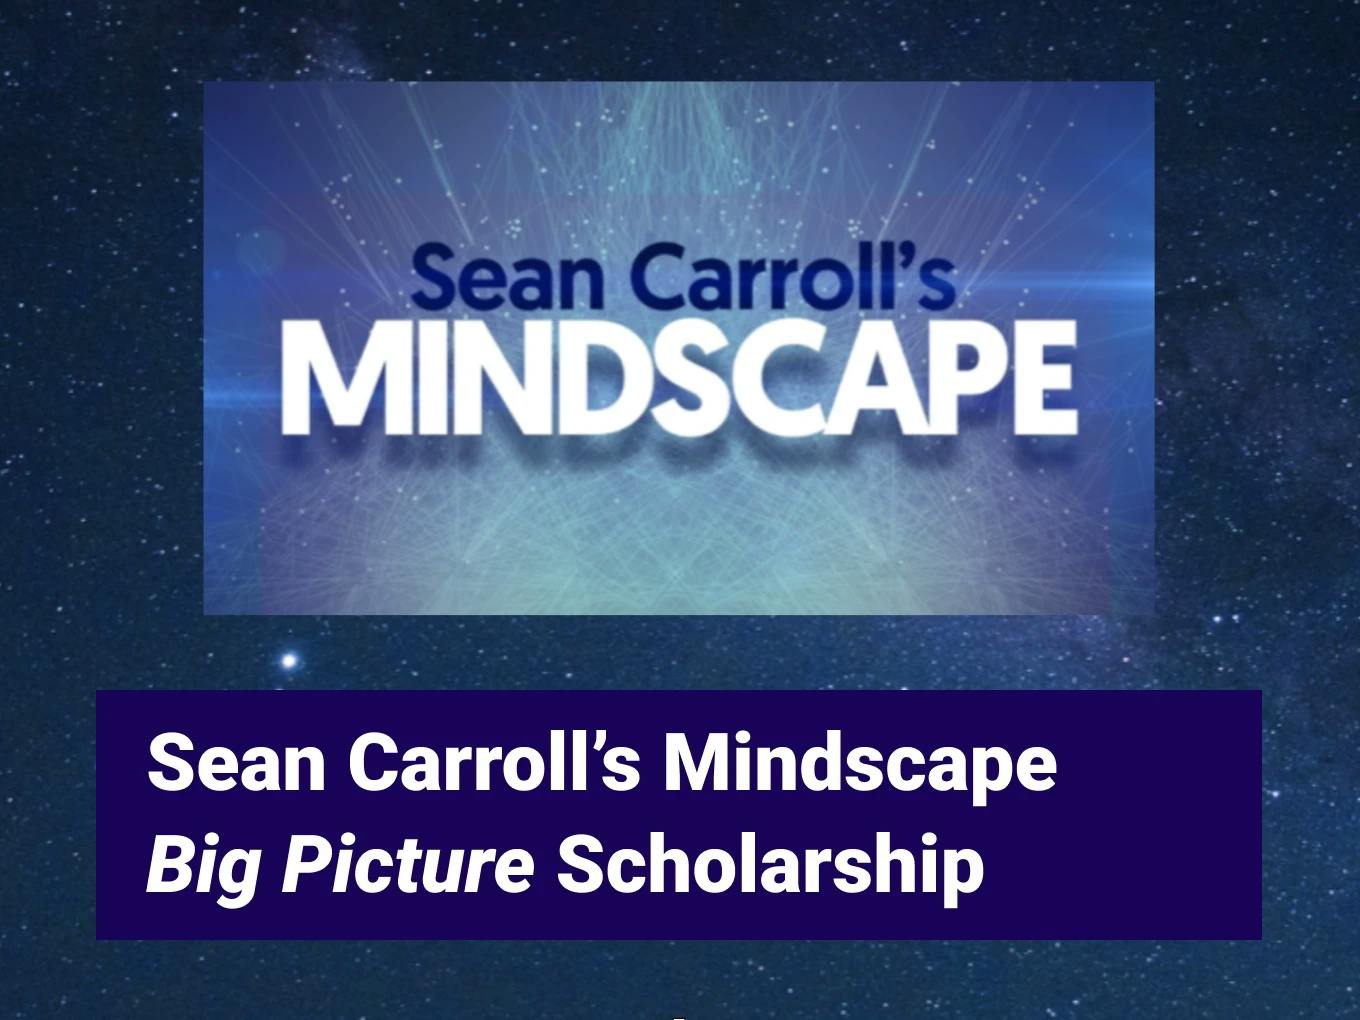 Sean Carroll's Mindscape Big Picture Scholarship